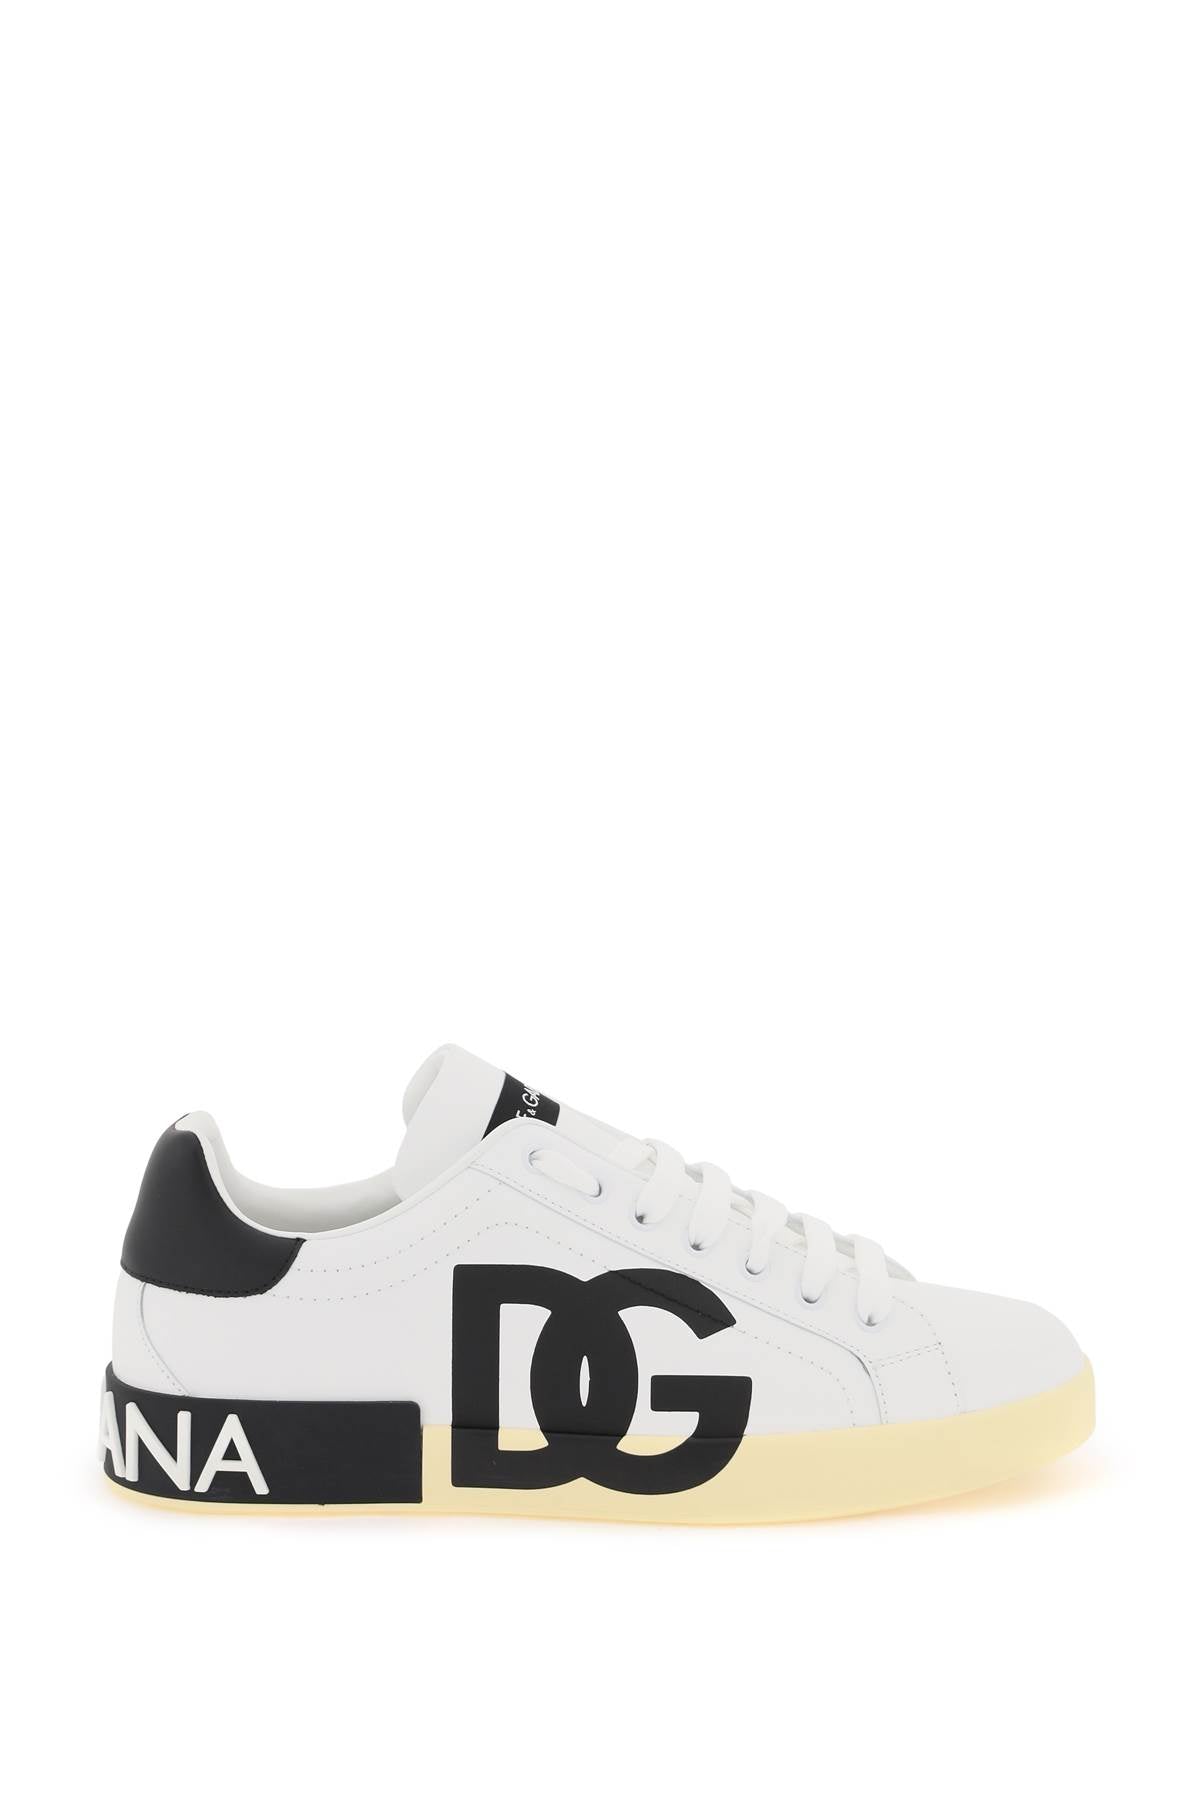 Dolce & gabbana leather portofino sneakers with dg logo-0